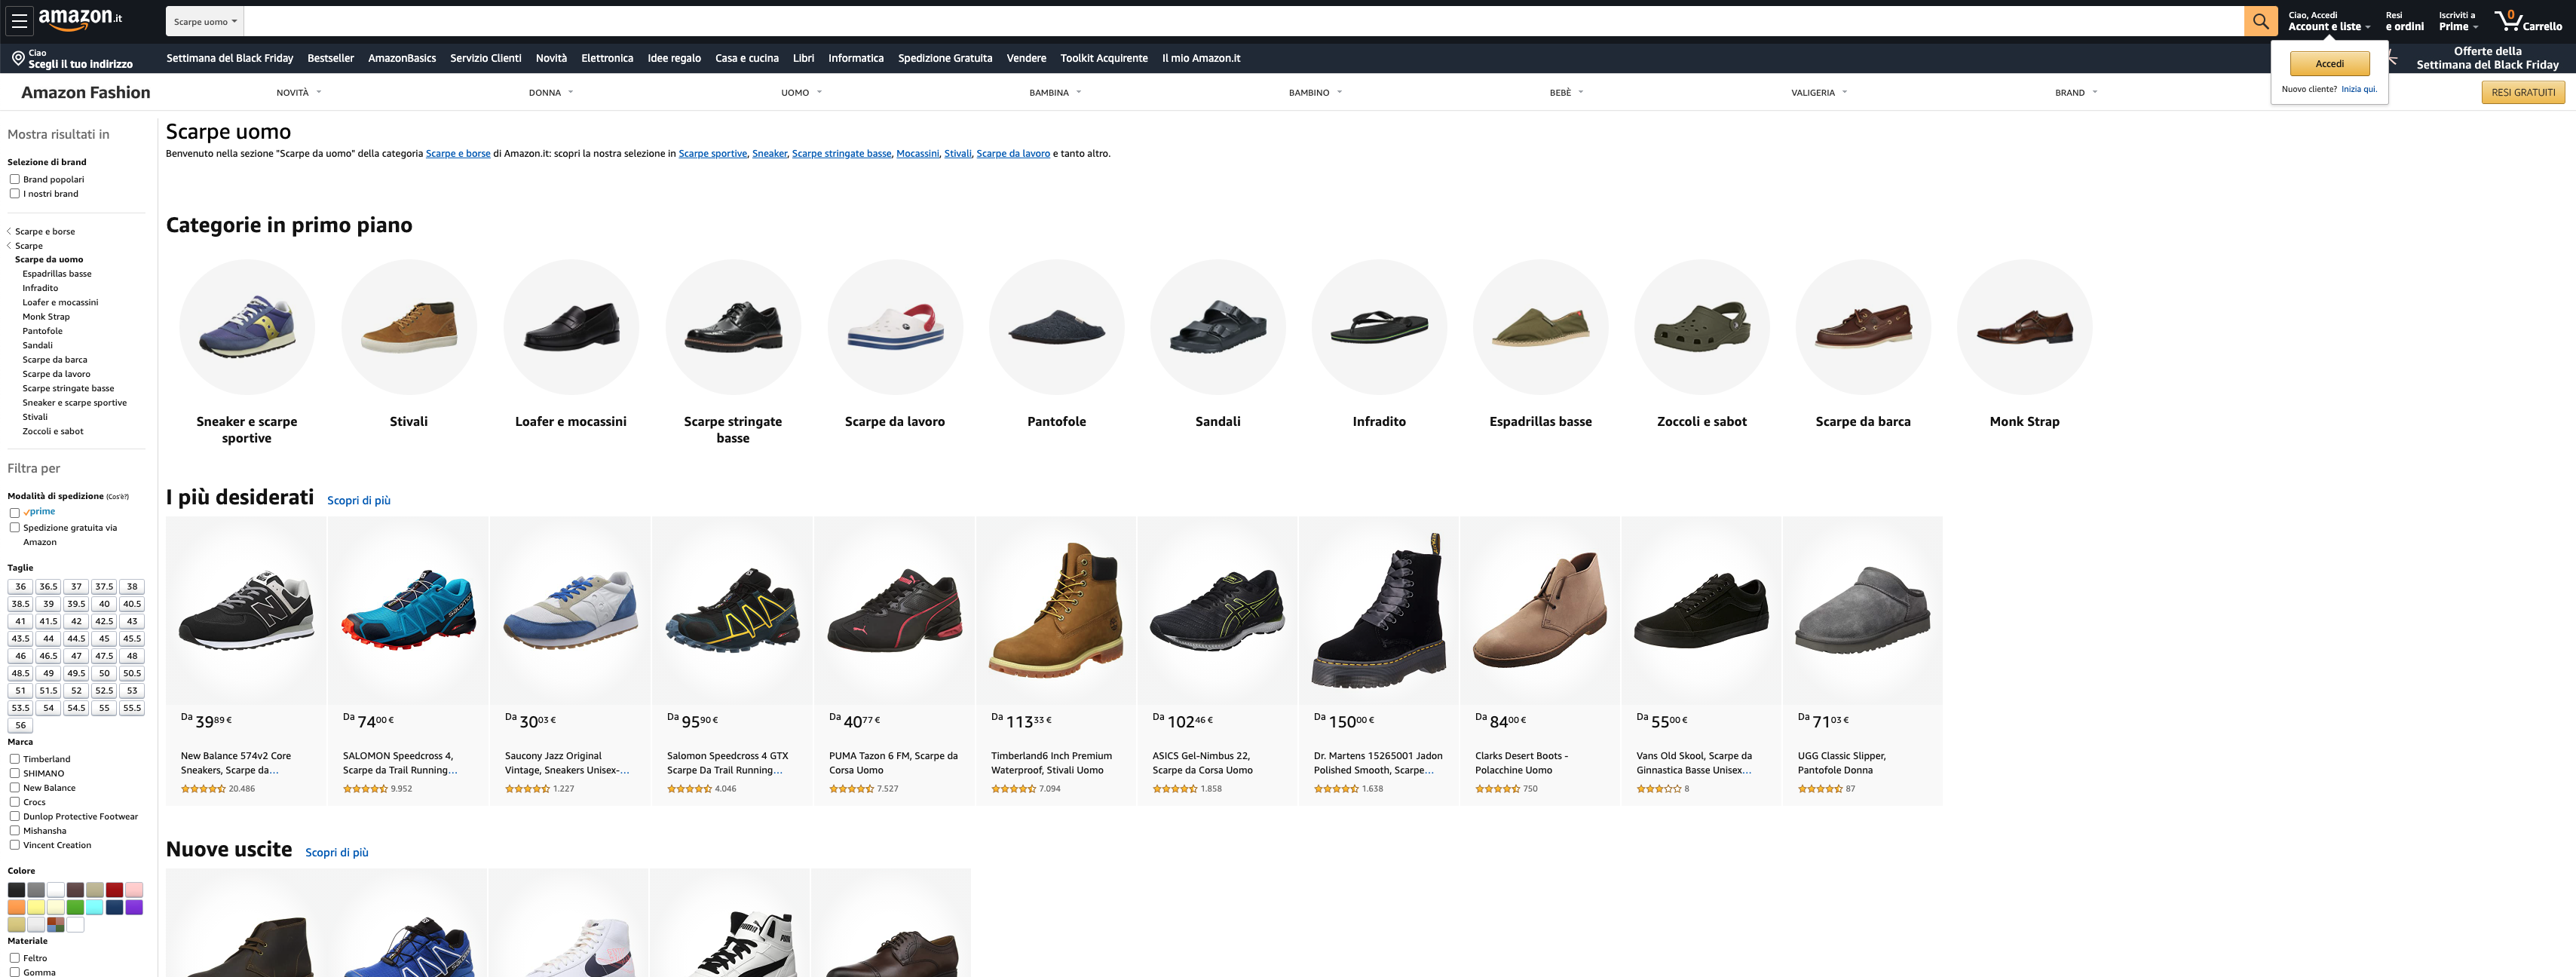 negozi di scarpe online affidabili